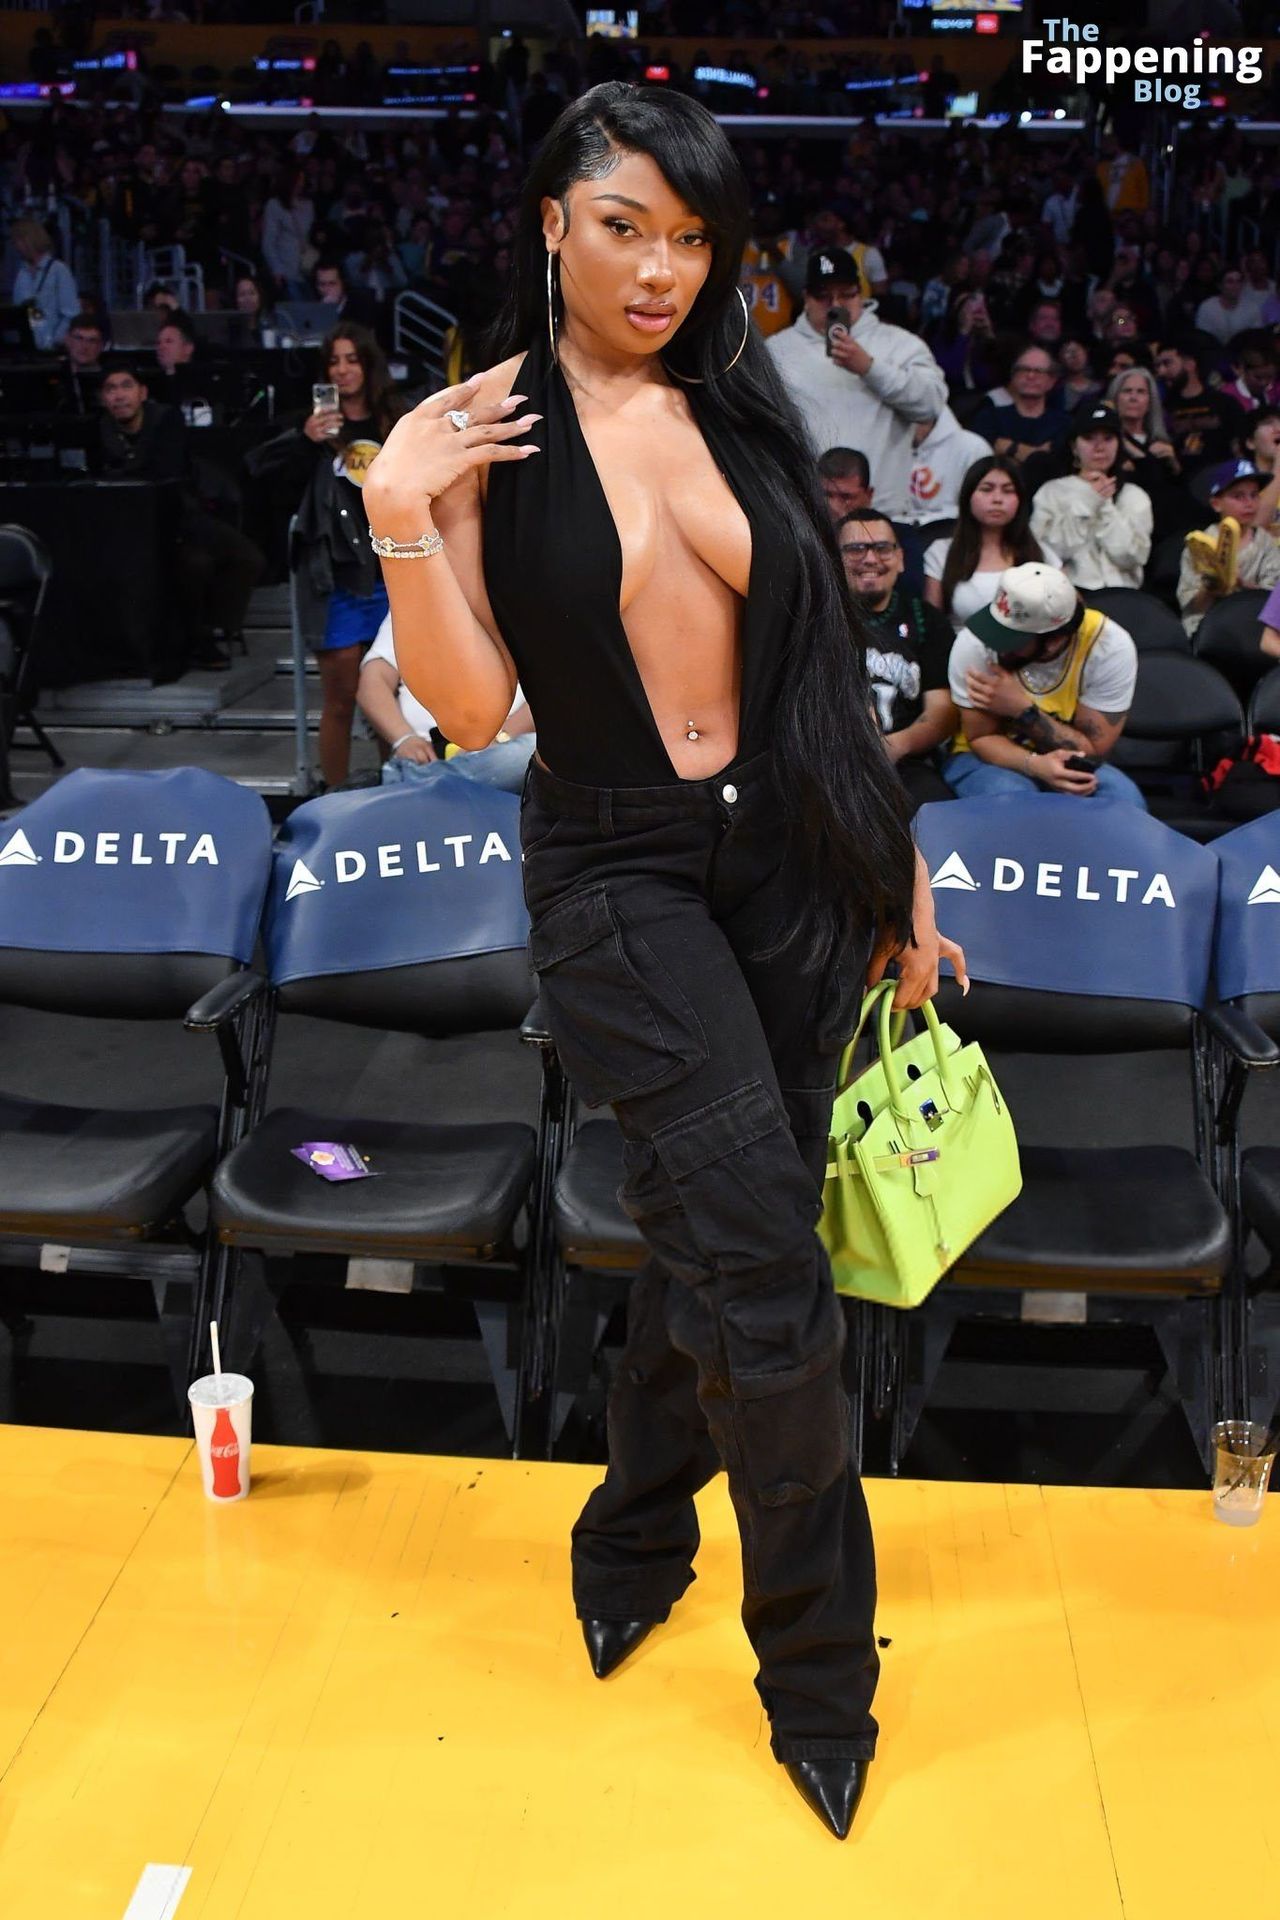 Megan Thee Stallion Flaunts Her Big Boobs at the NBA Game (32 Photos)